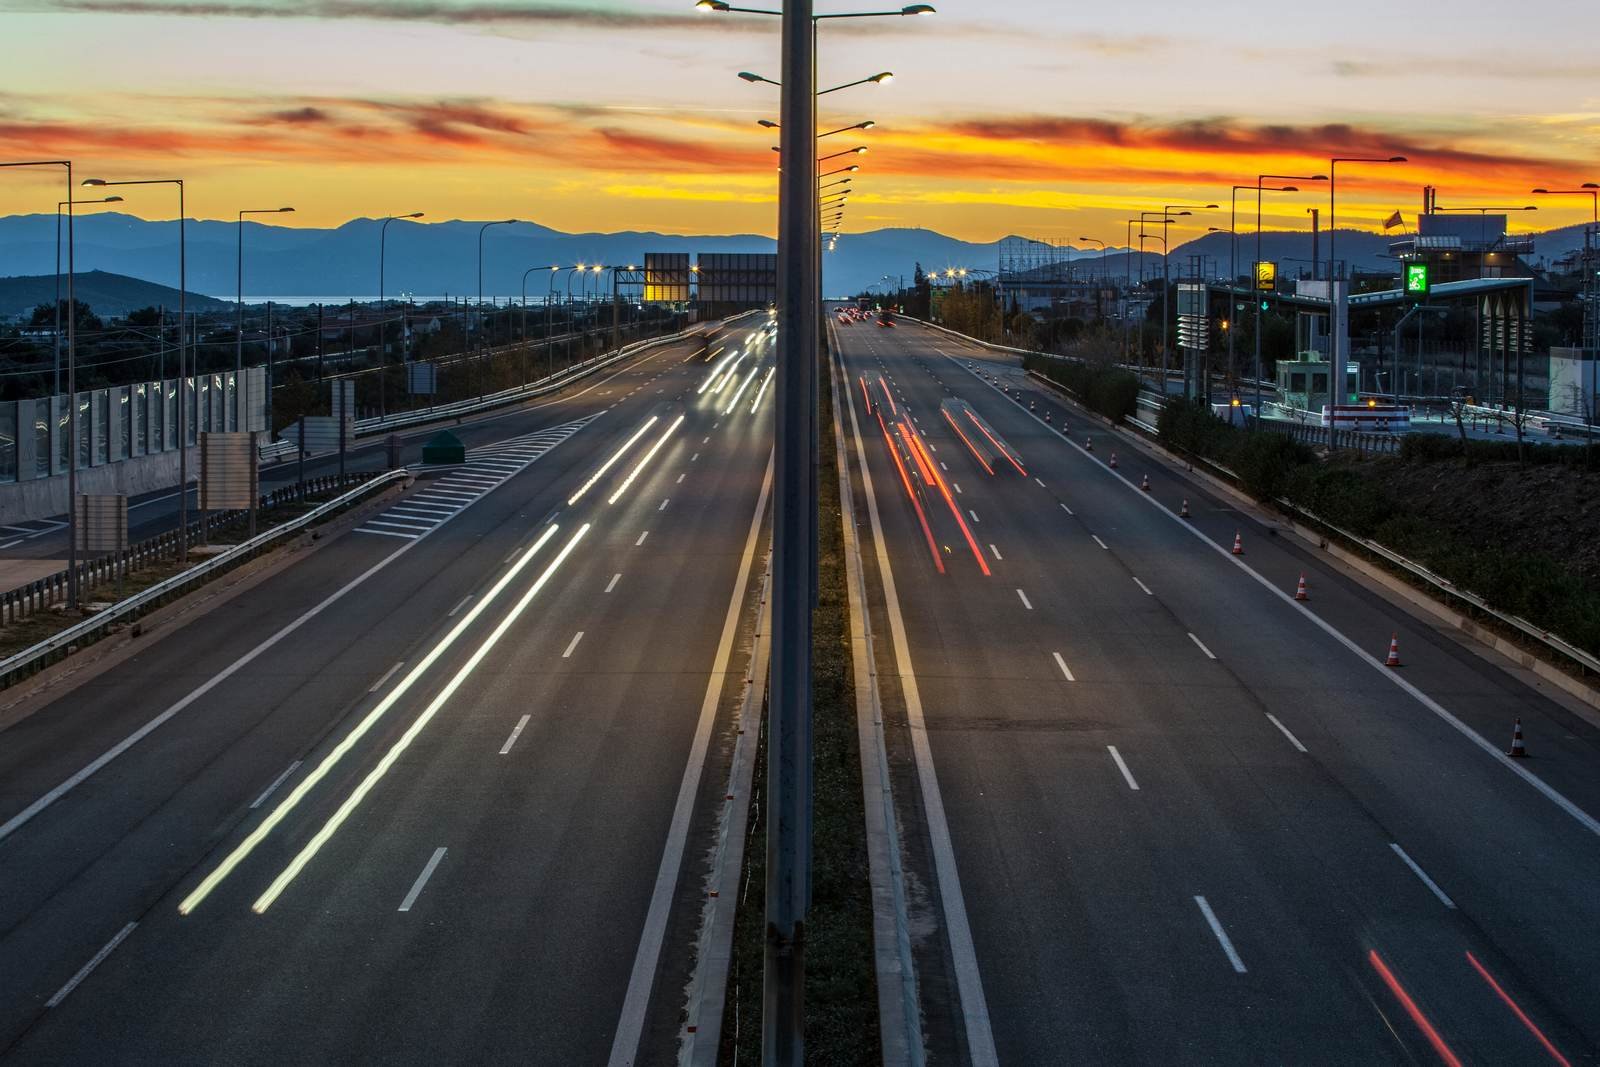 More information about "Ολυμπία Οδός: Εικονική περιήγηση στον μεγαλύτερο αυτοκινητόδρομο"